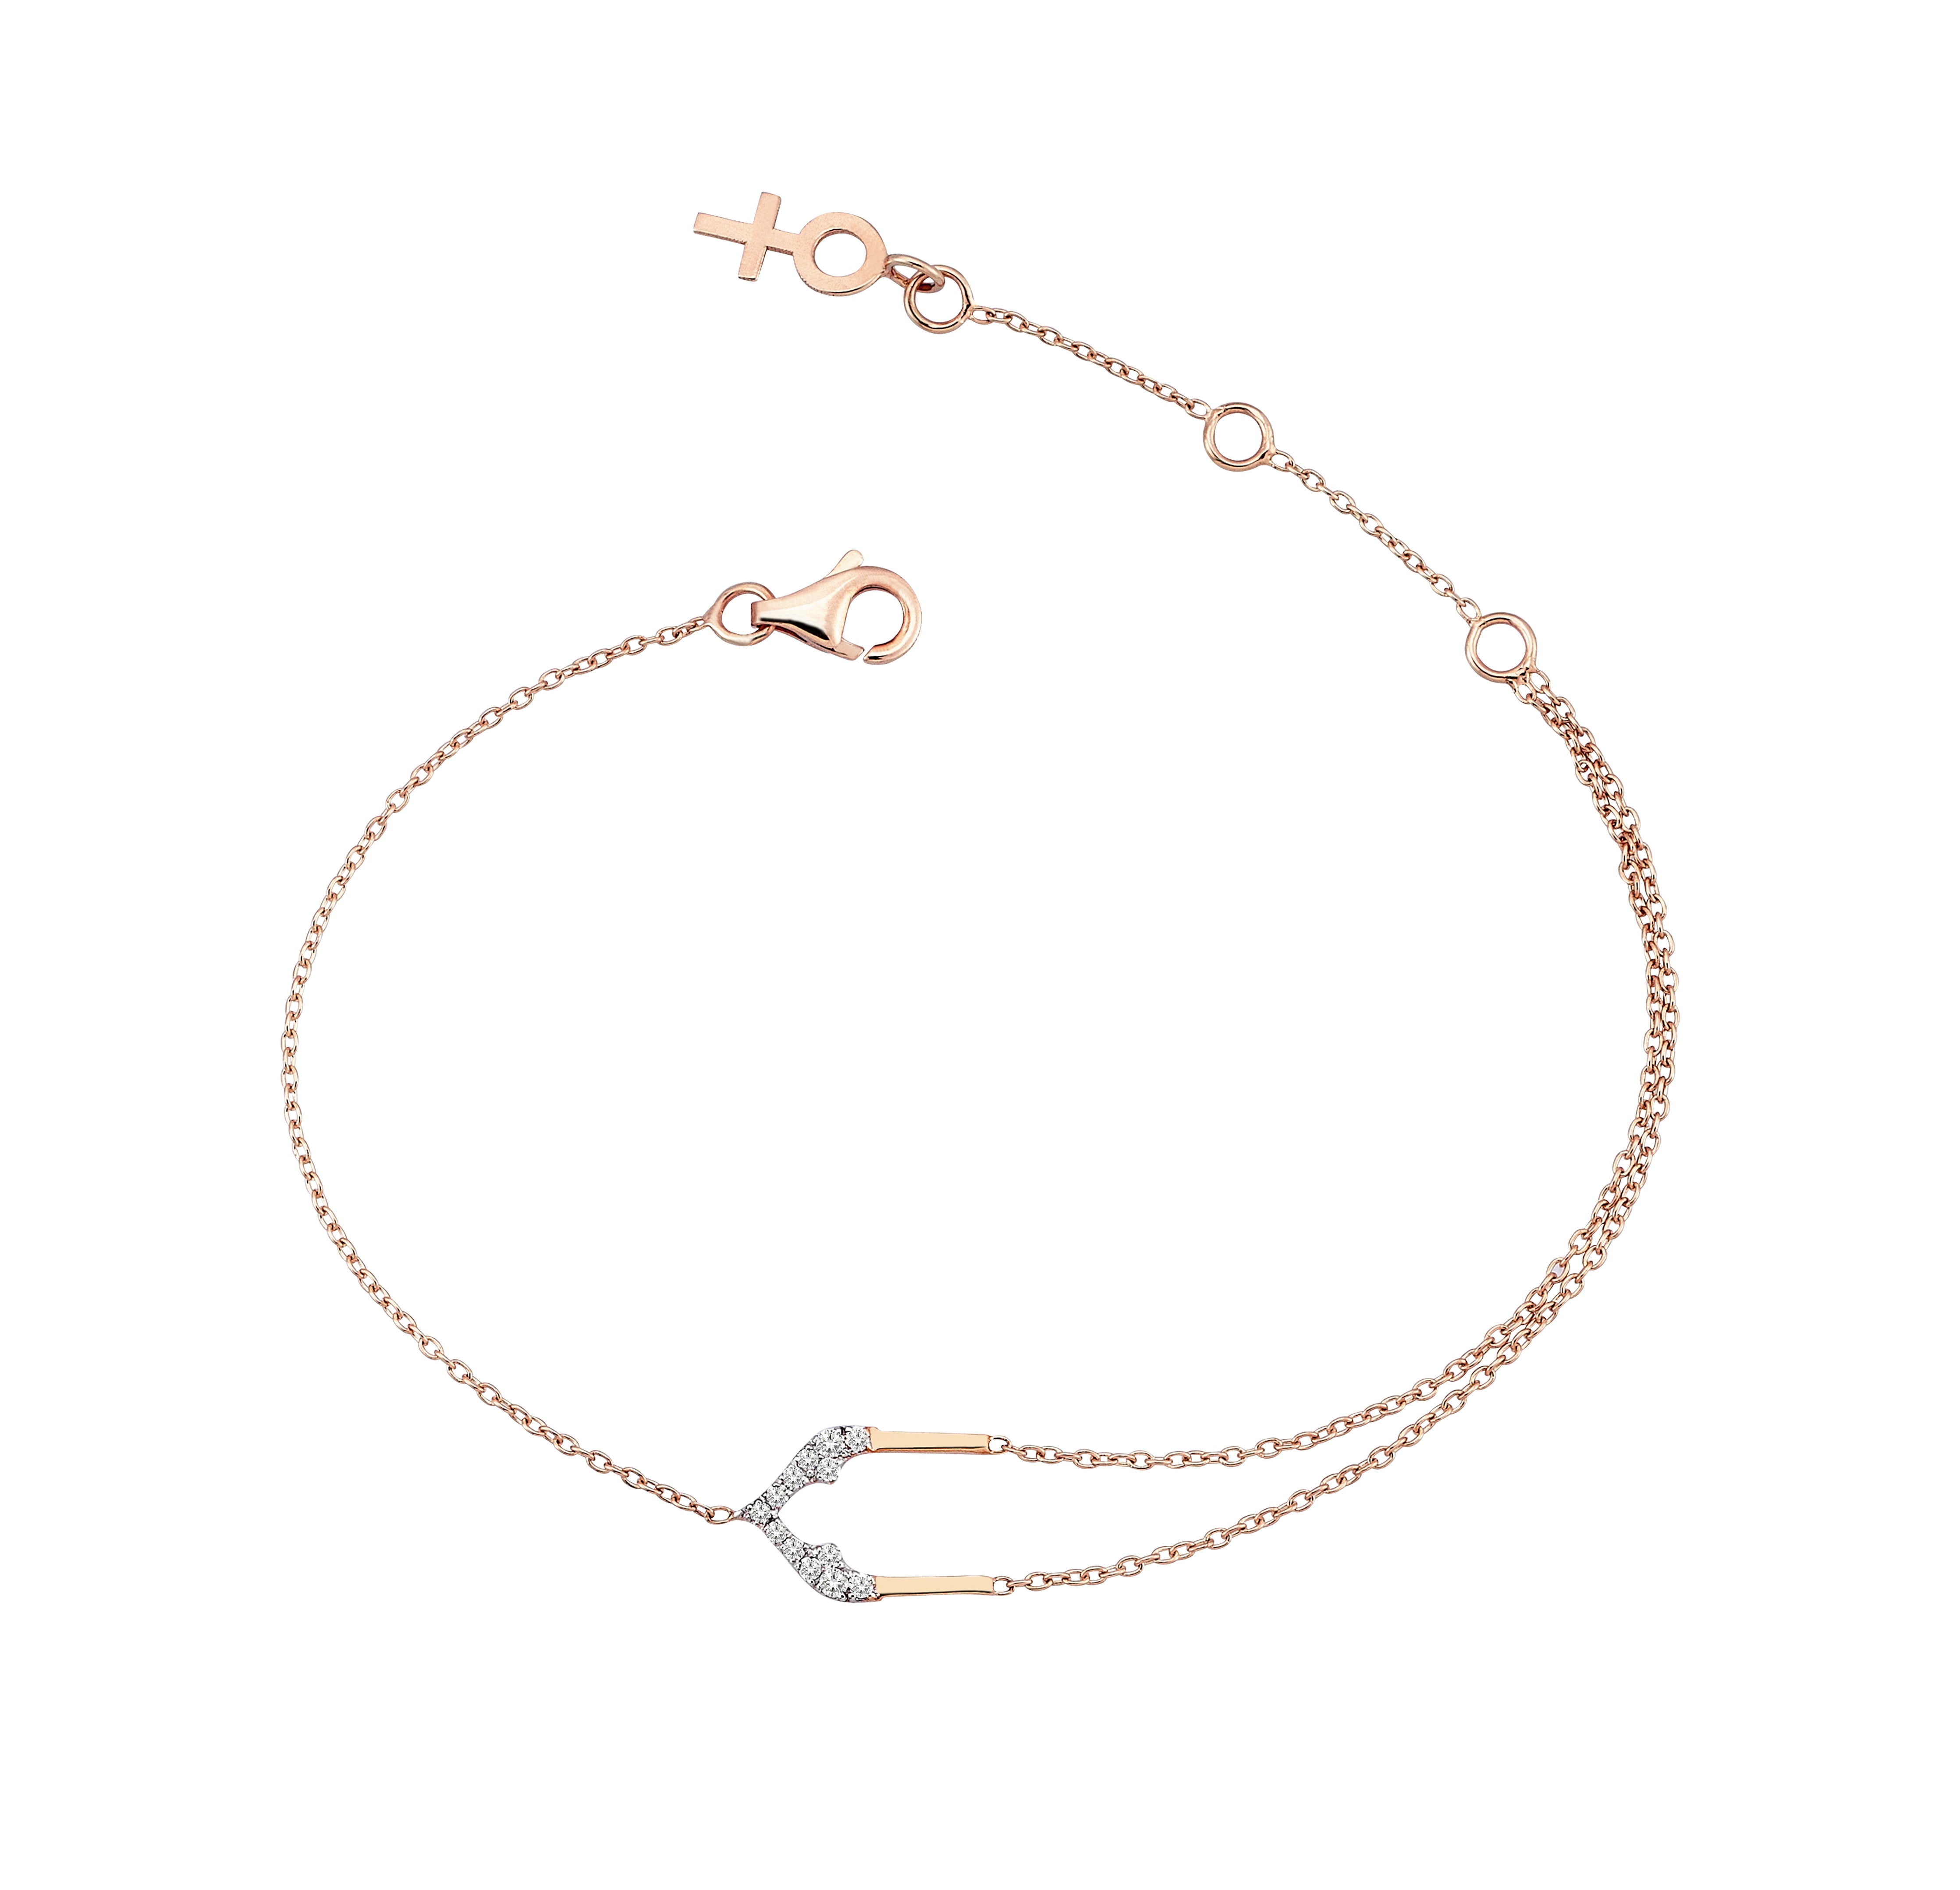 Pointed Trefoil Arch Bracelet in Rose Gold - Her Story Shop